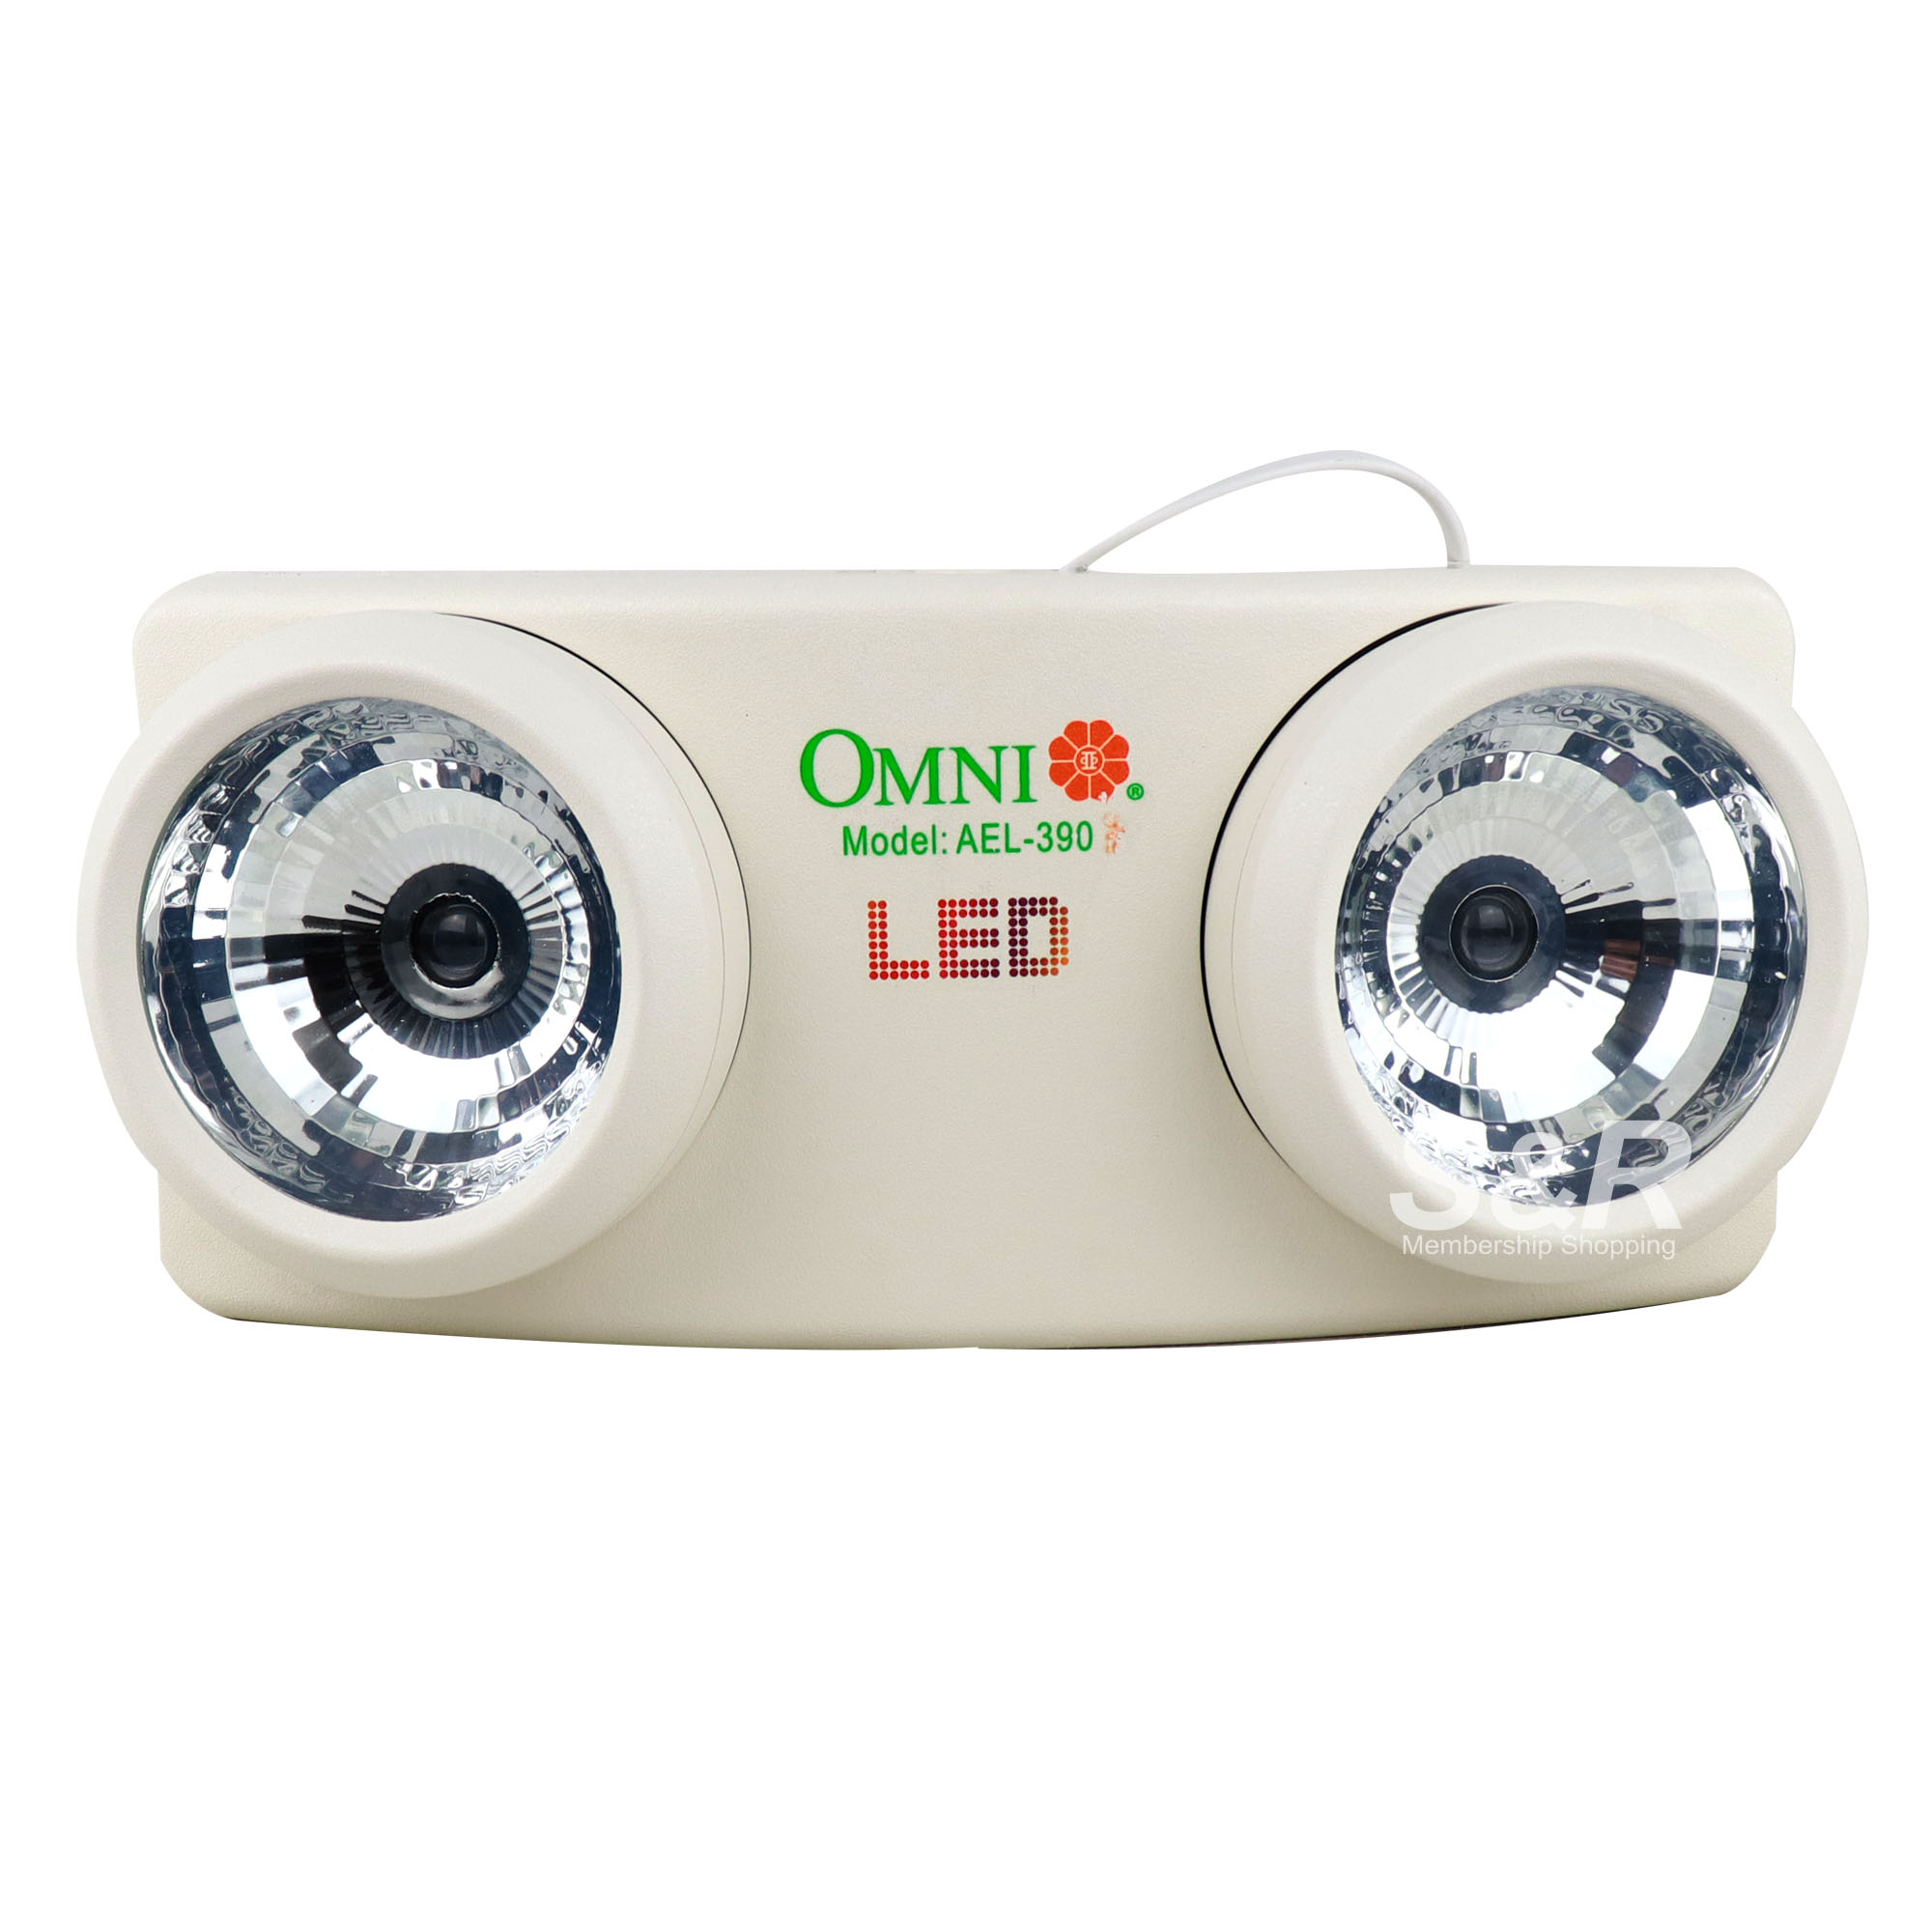 Omni Swivel Head Automatic Emergency Light AEL-390 1pc